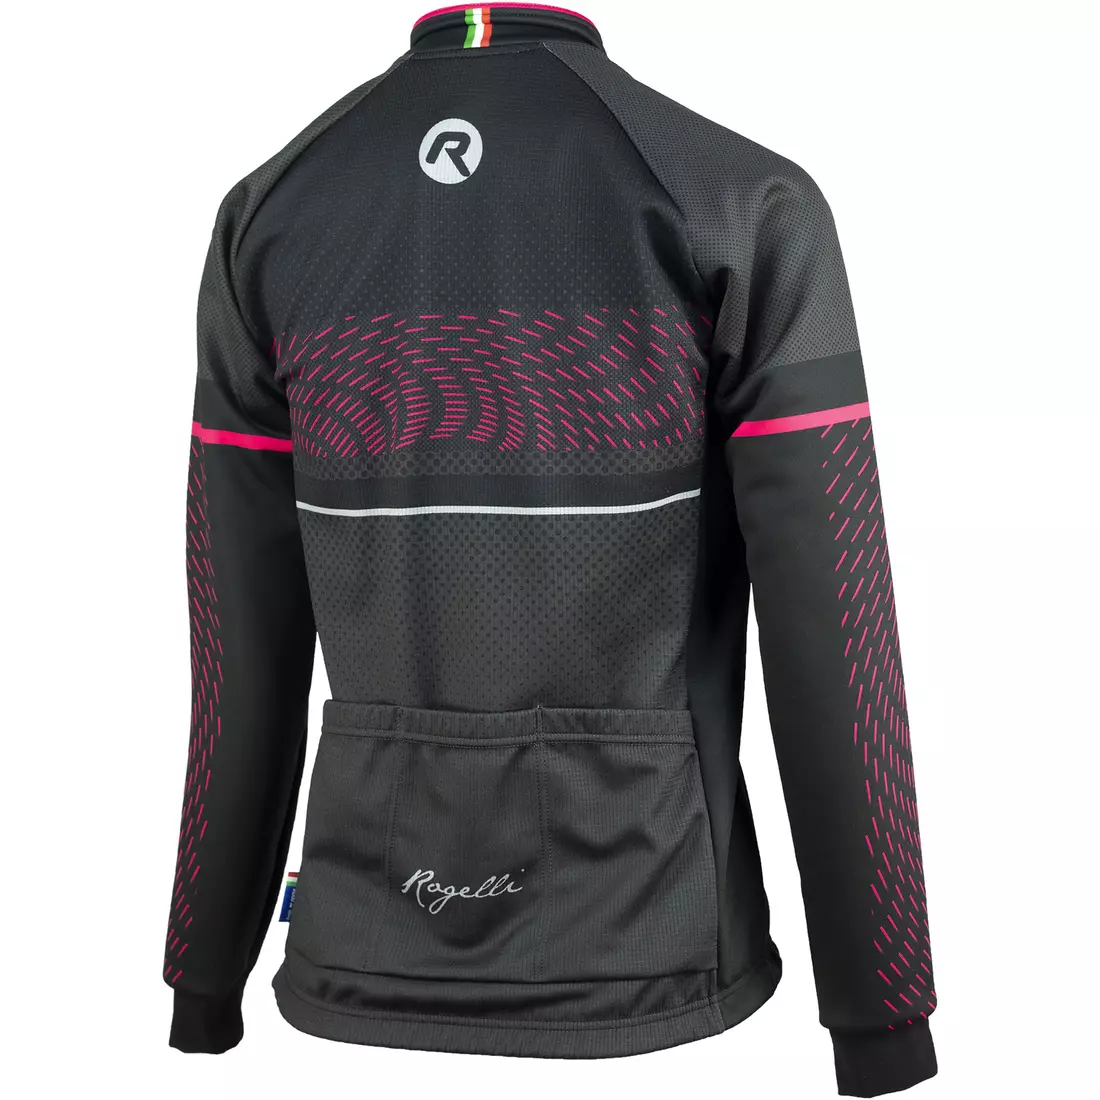 Dámska cyklistická bunda ROGELLI BELLA, jemne zateplená, čierno-šedo-ružová